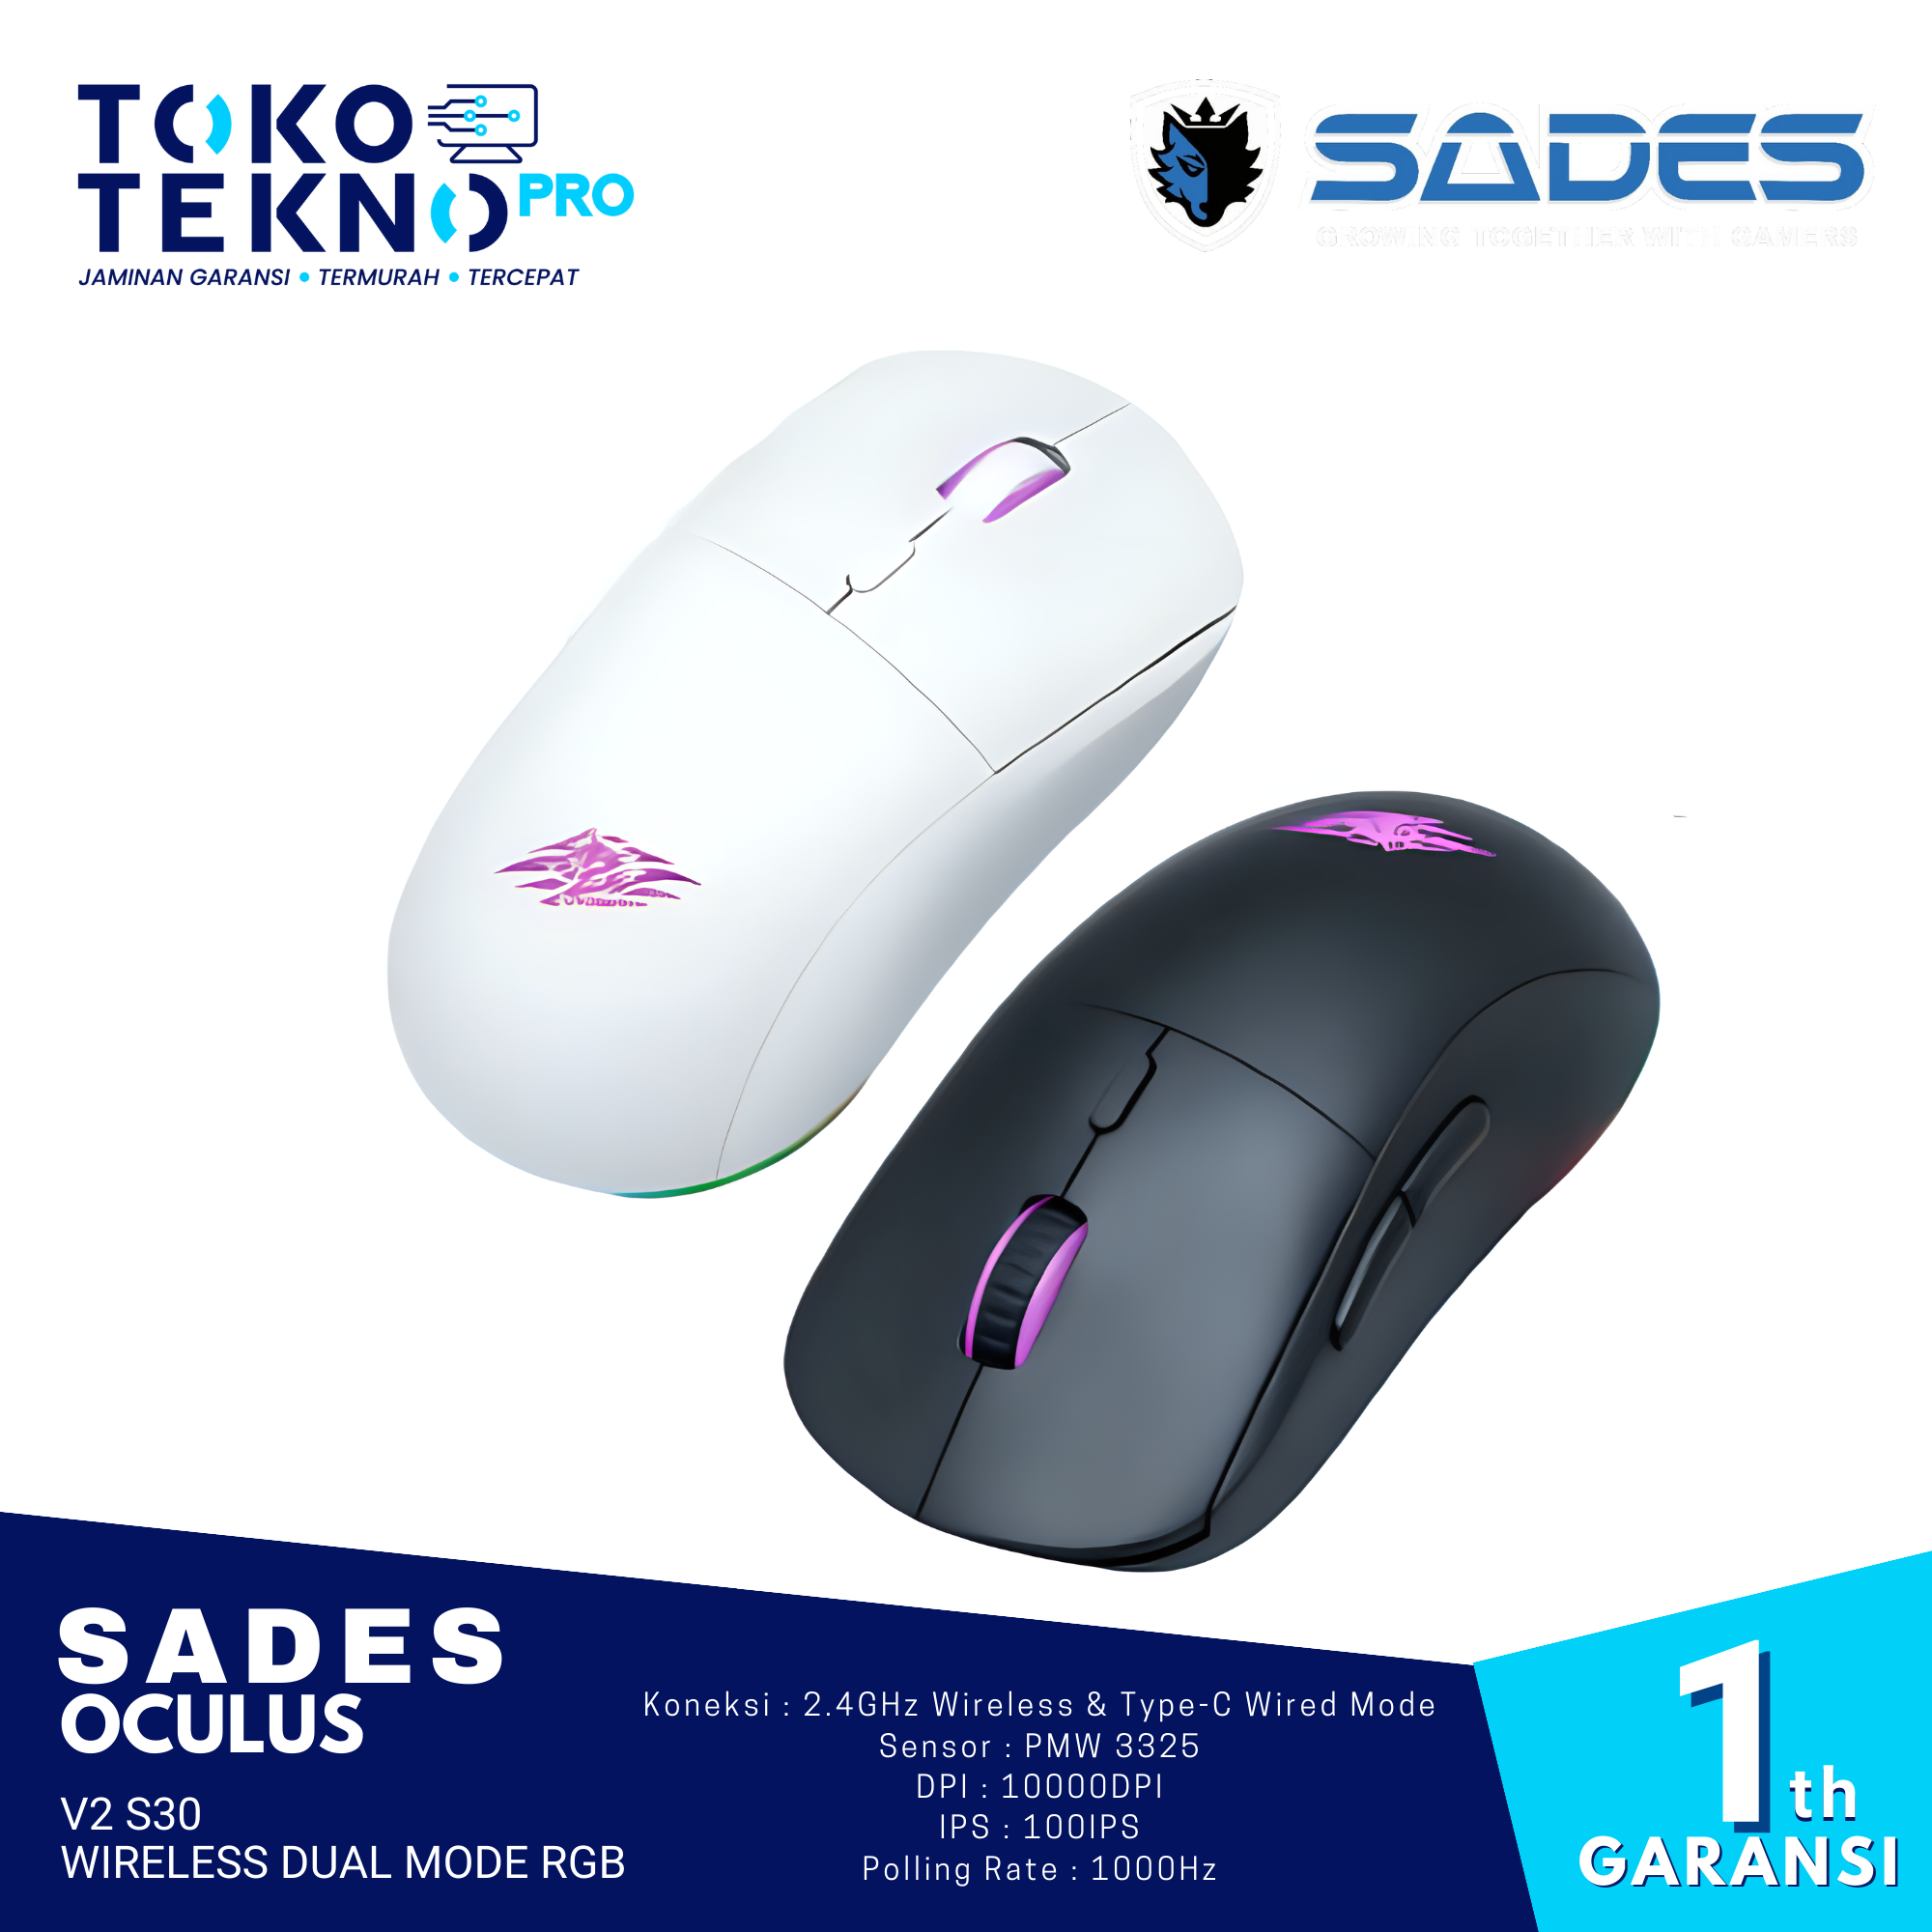 Sades Oculus V2 S30 Wireless Dual Mode RGB Gaming Mouse